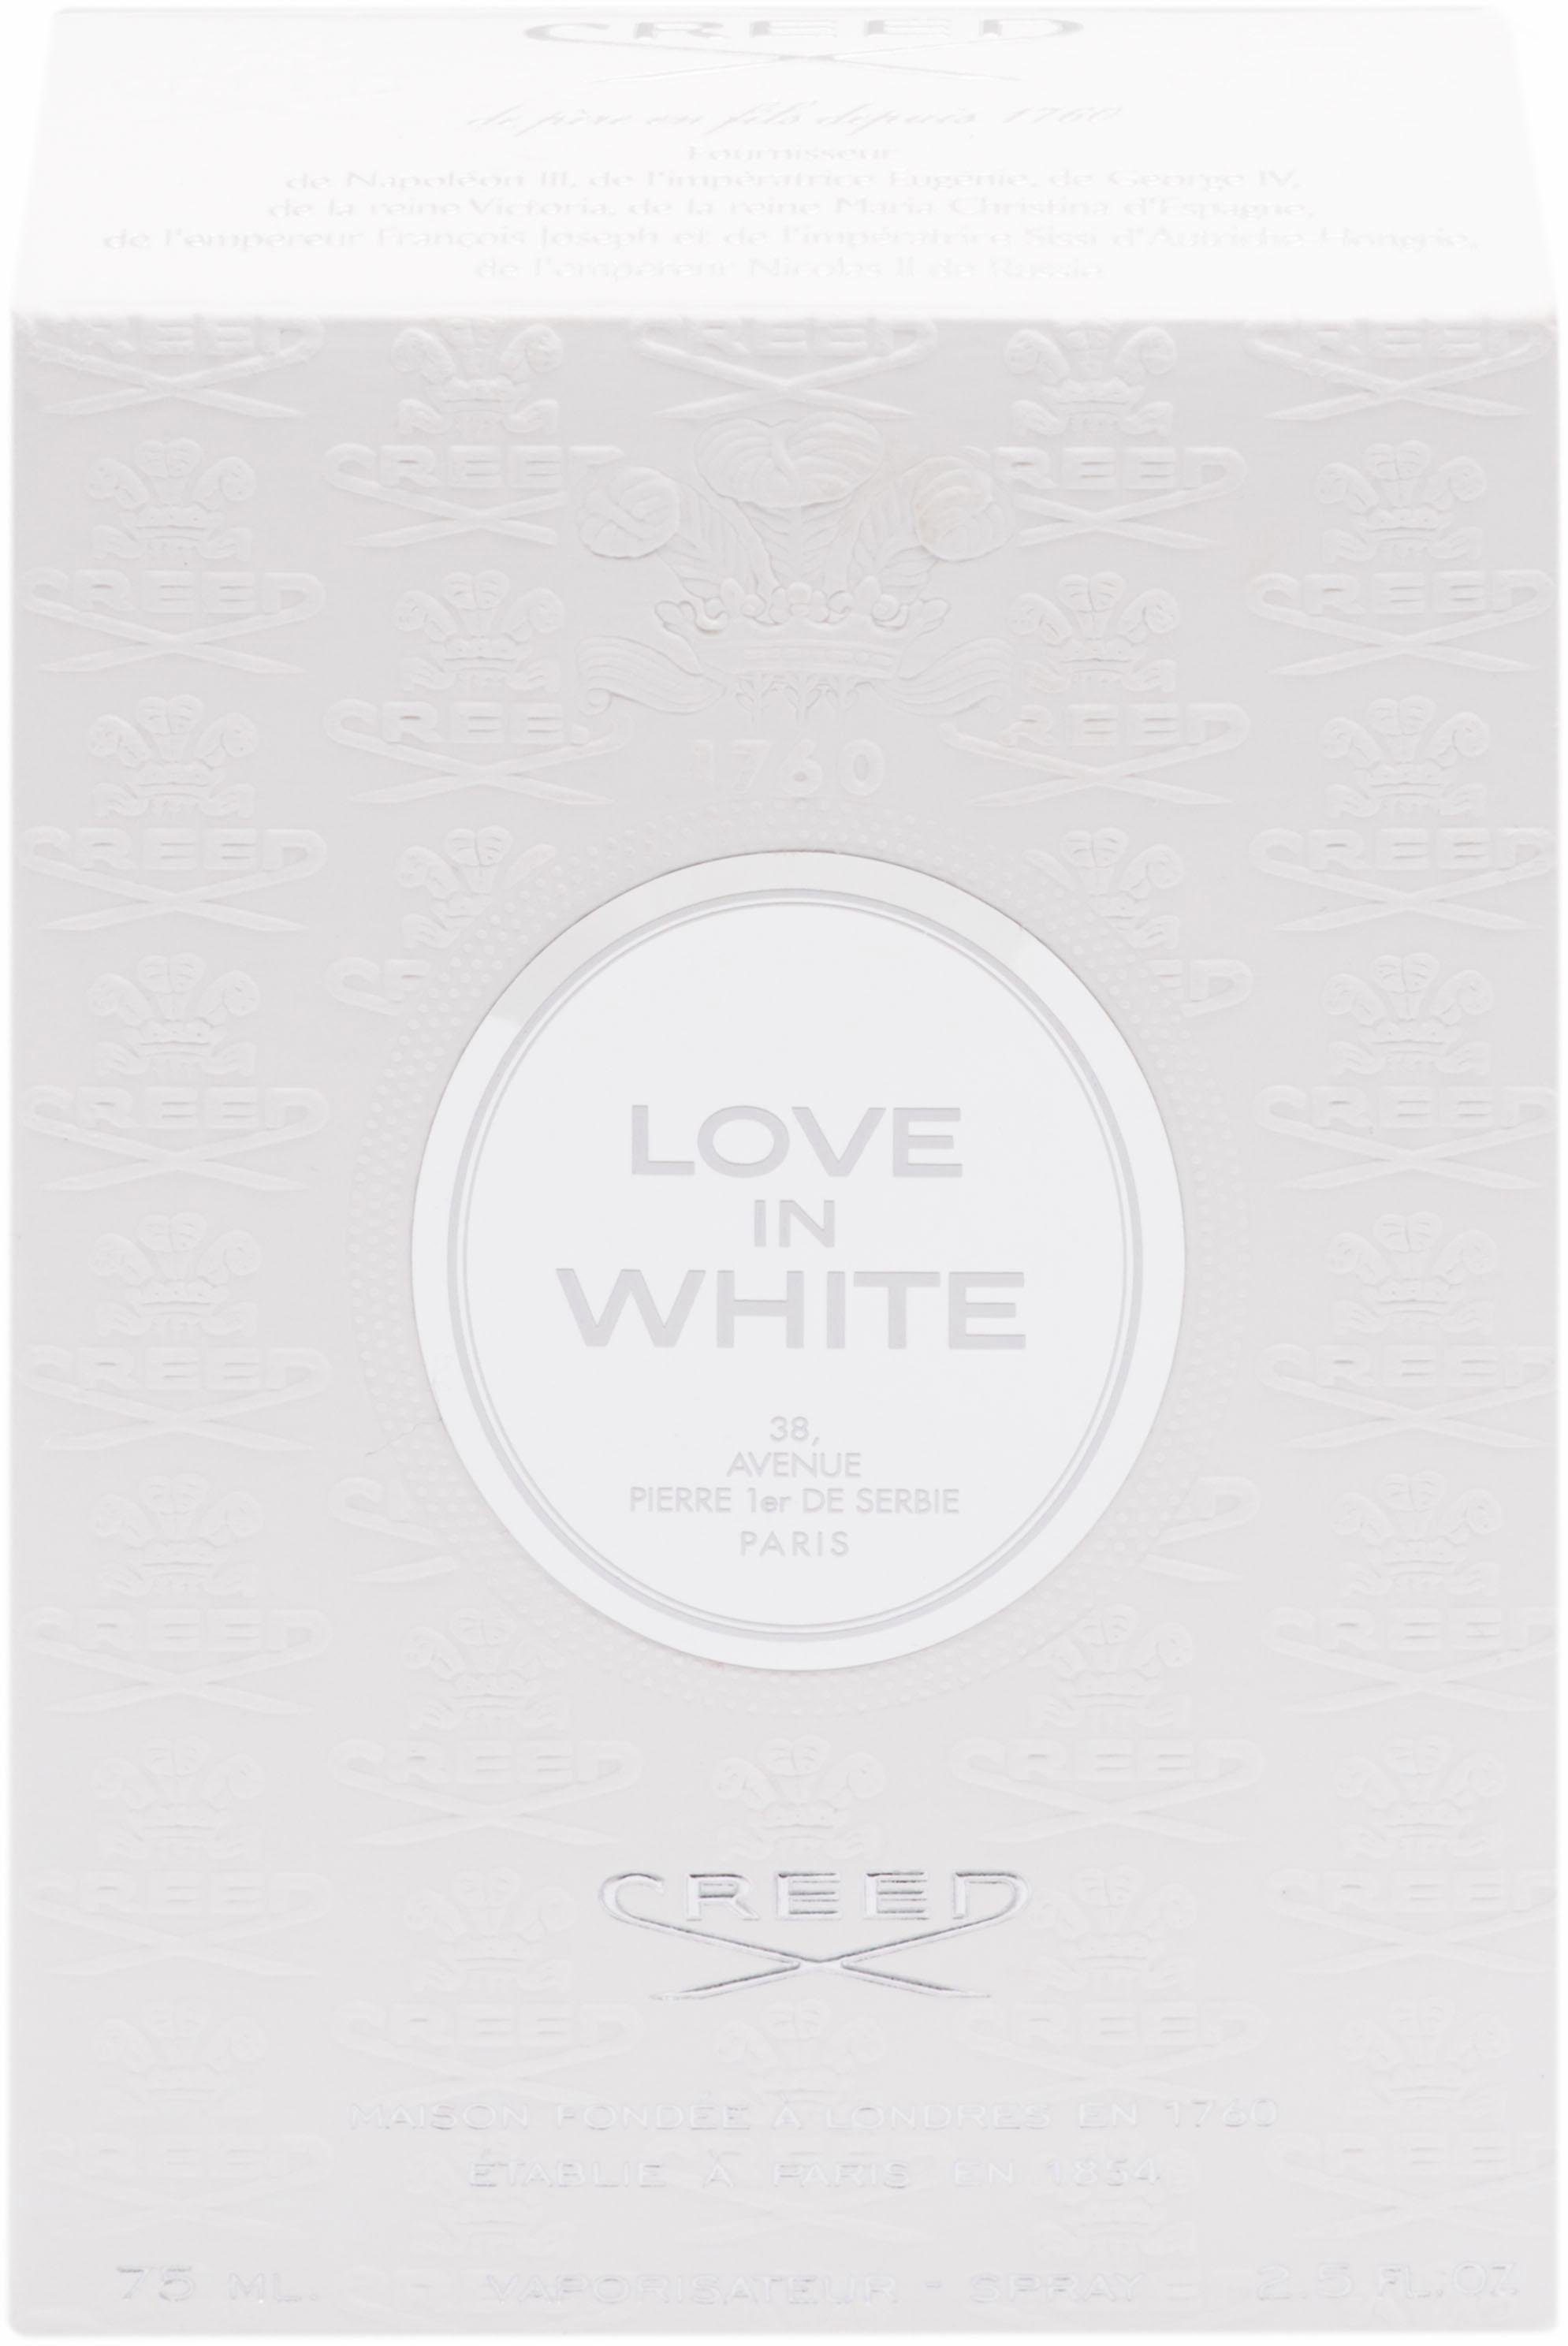 Creed Eau de Parfum Love in White